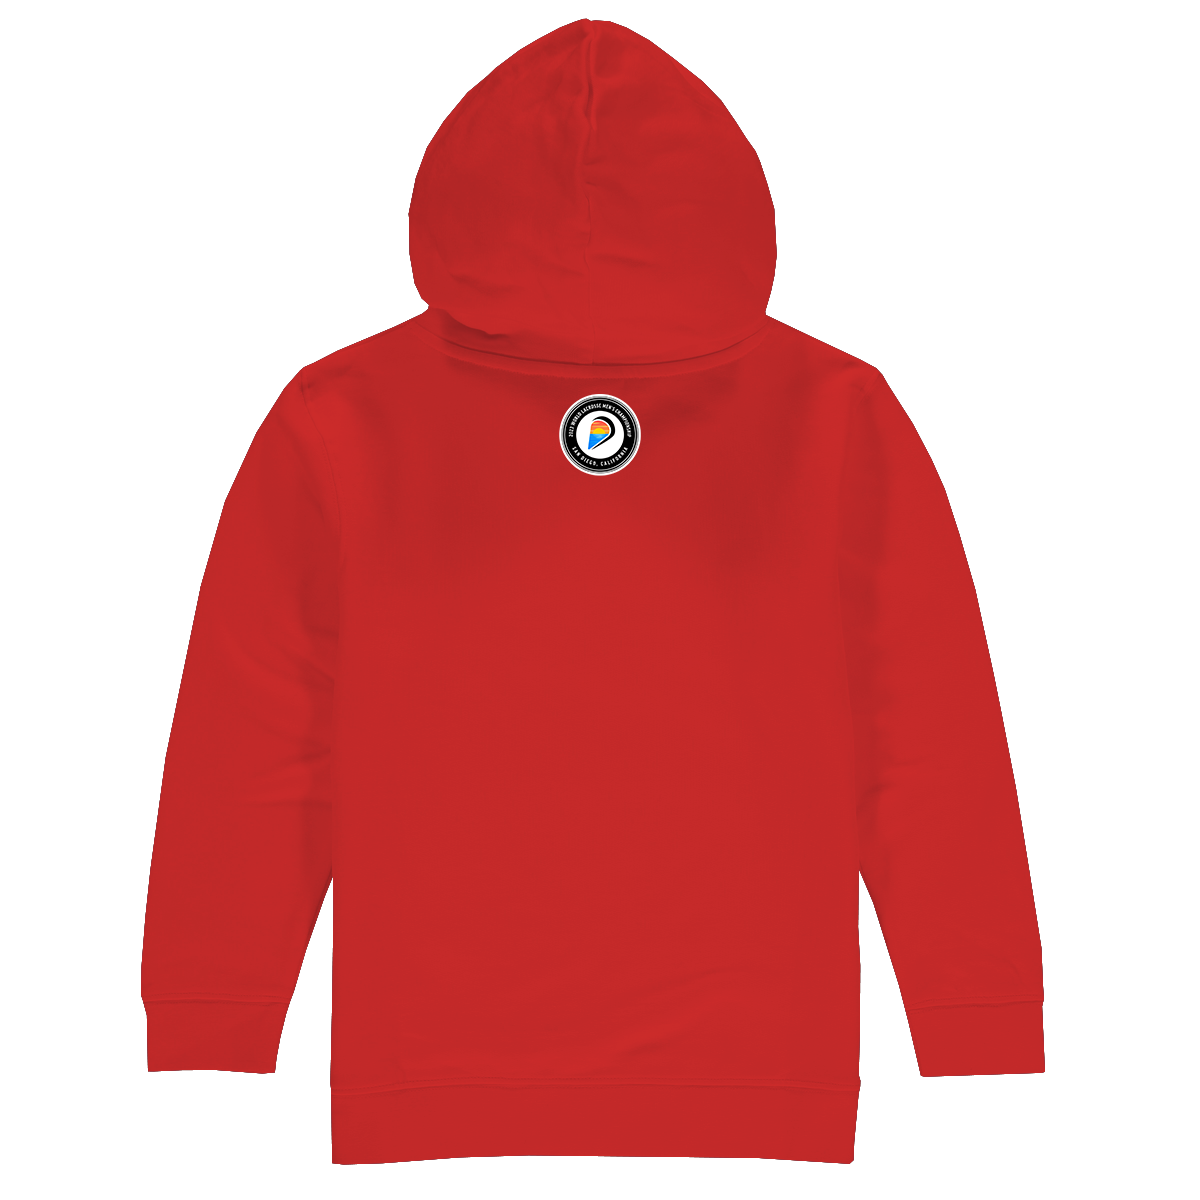 Italy Premium Unisex Hoodie Sweatshirt Red